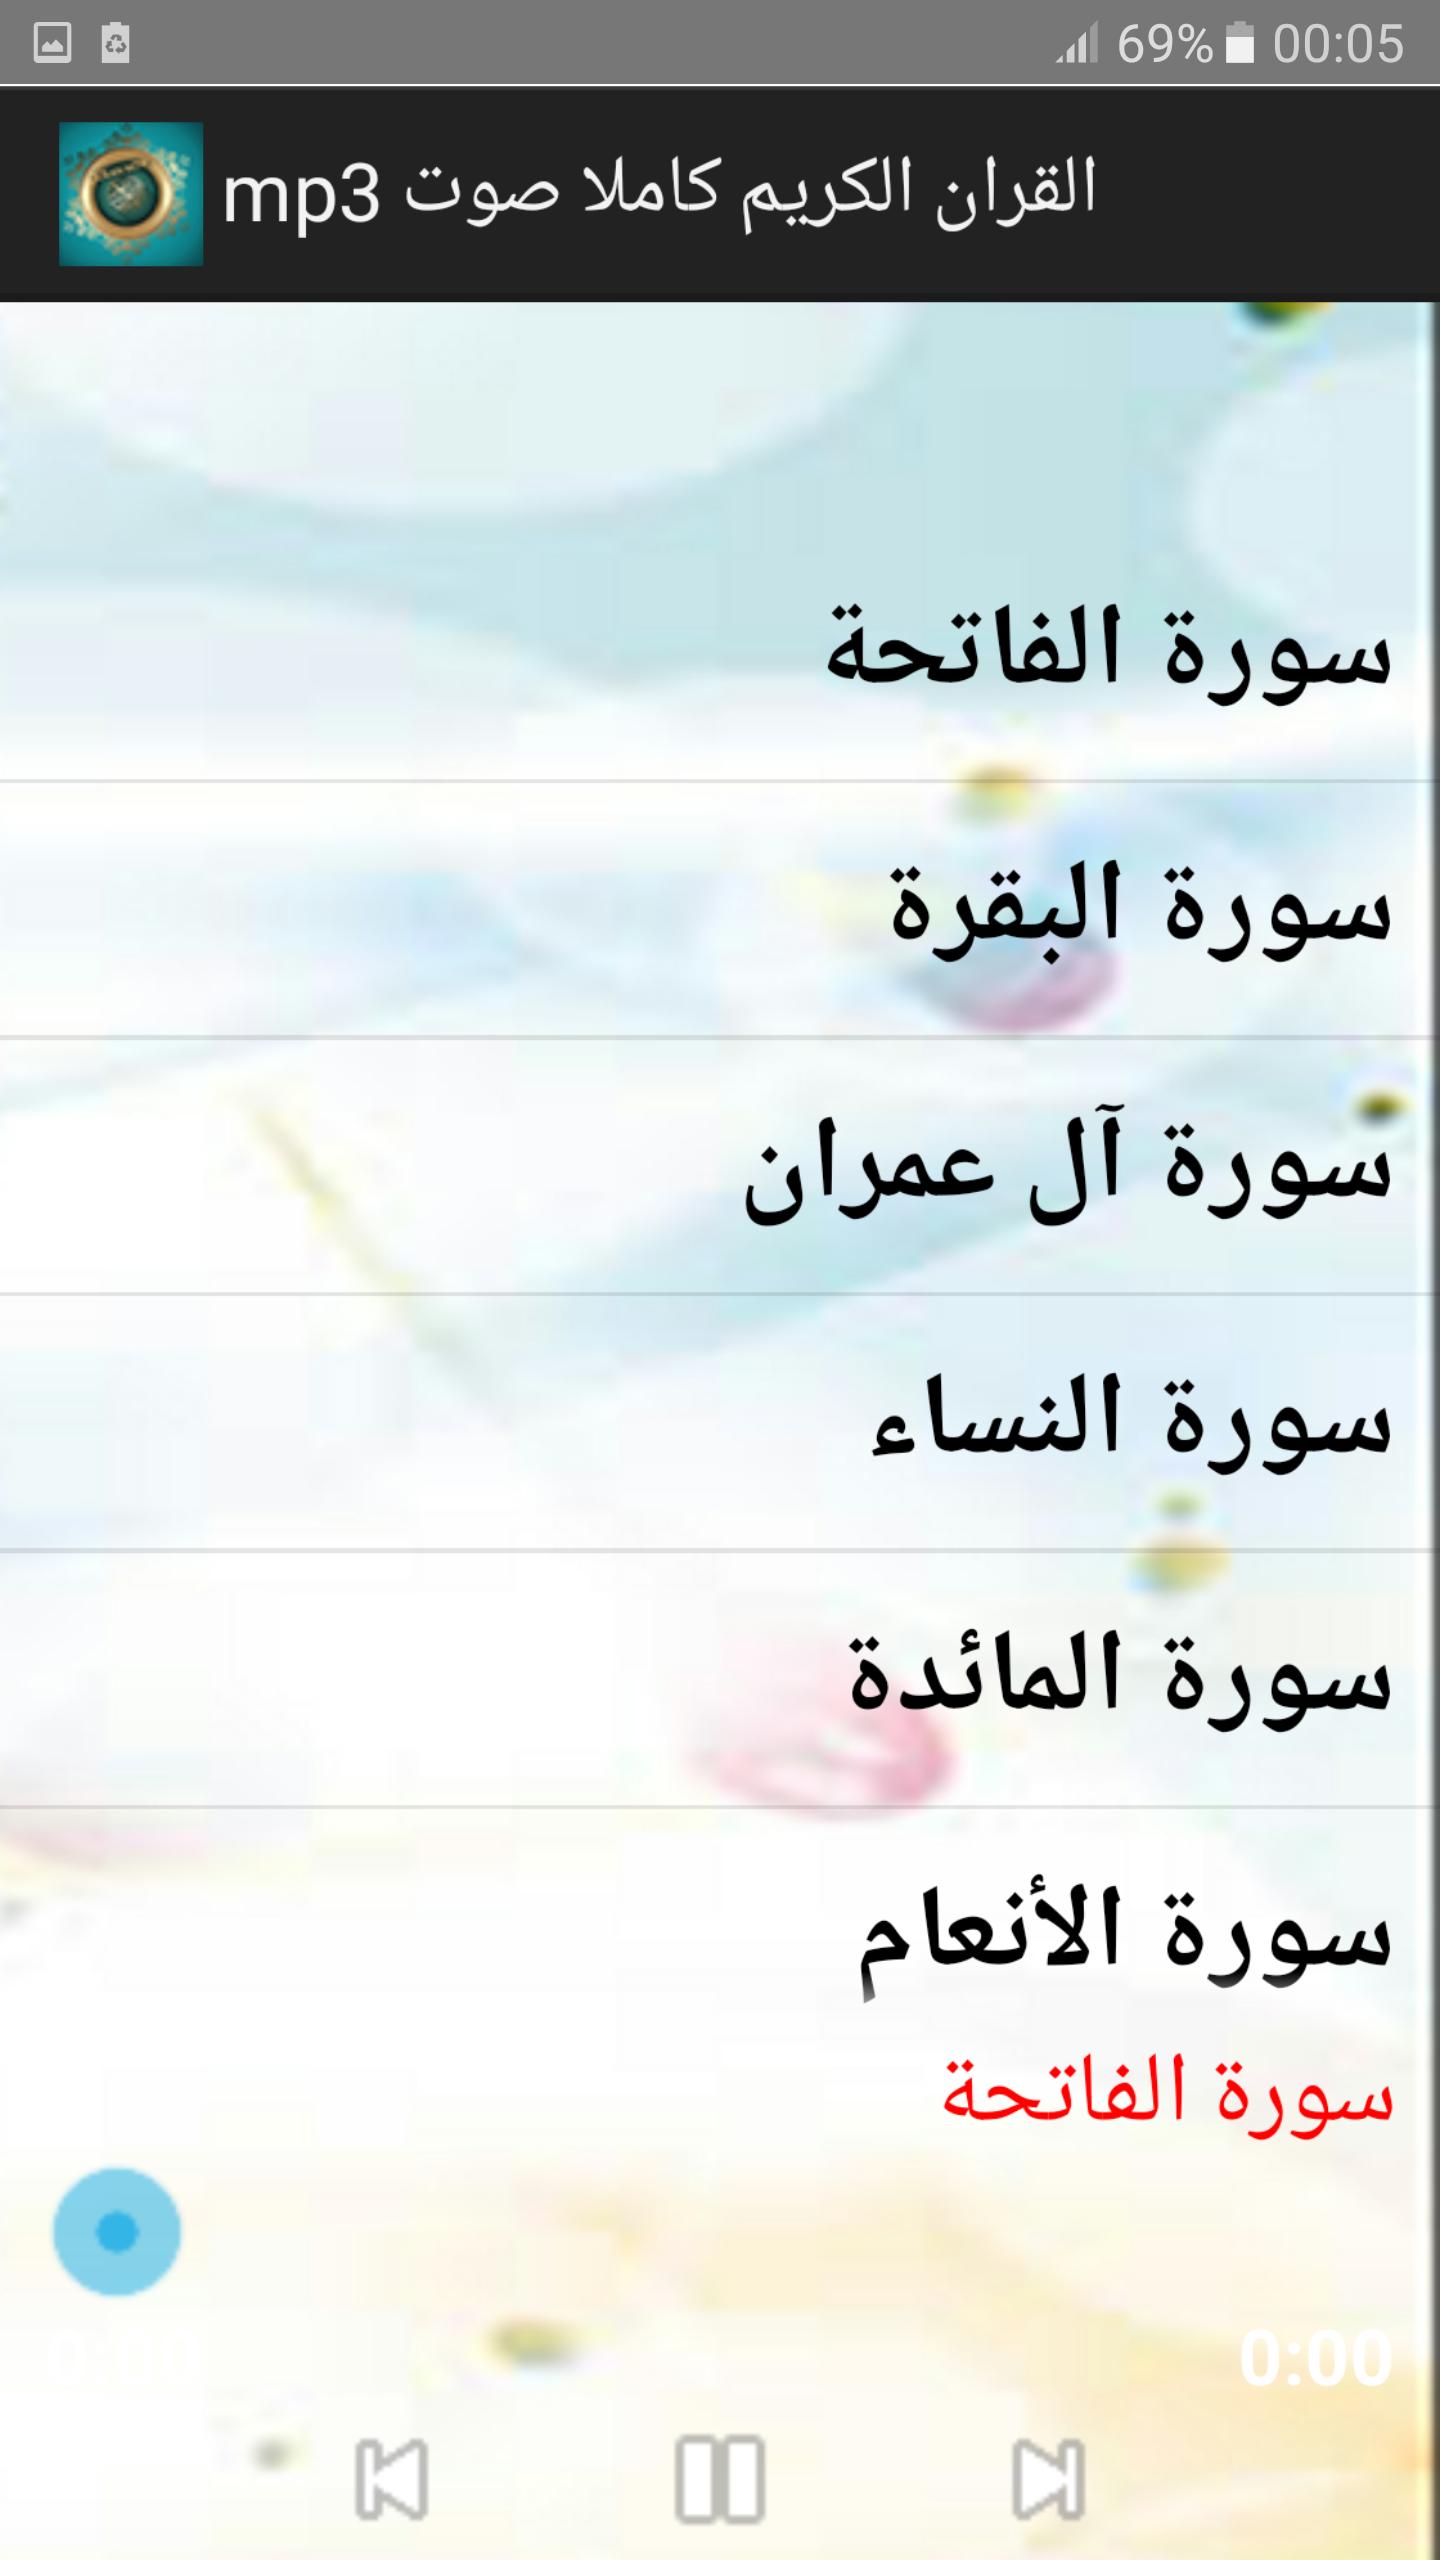 القران الكريم صوت mp3 for Android - APK Download